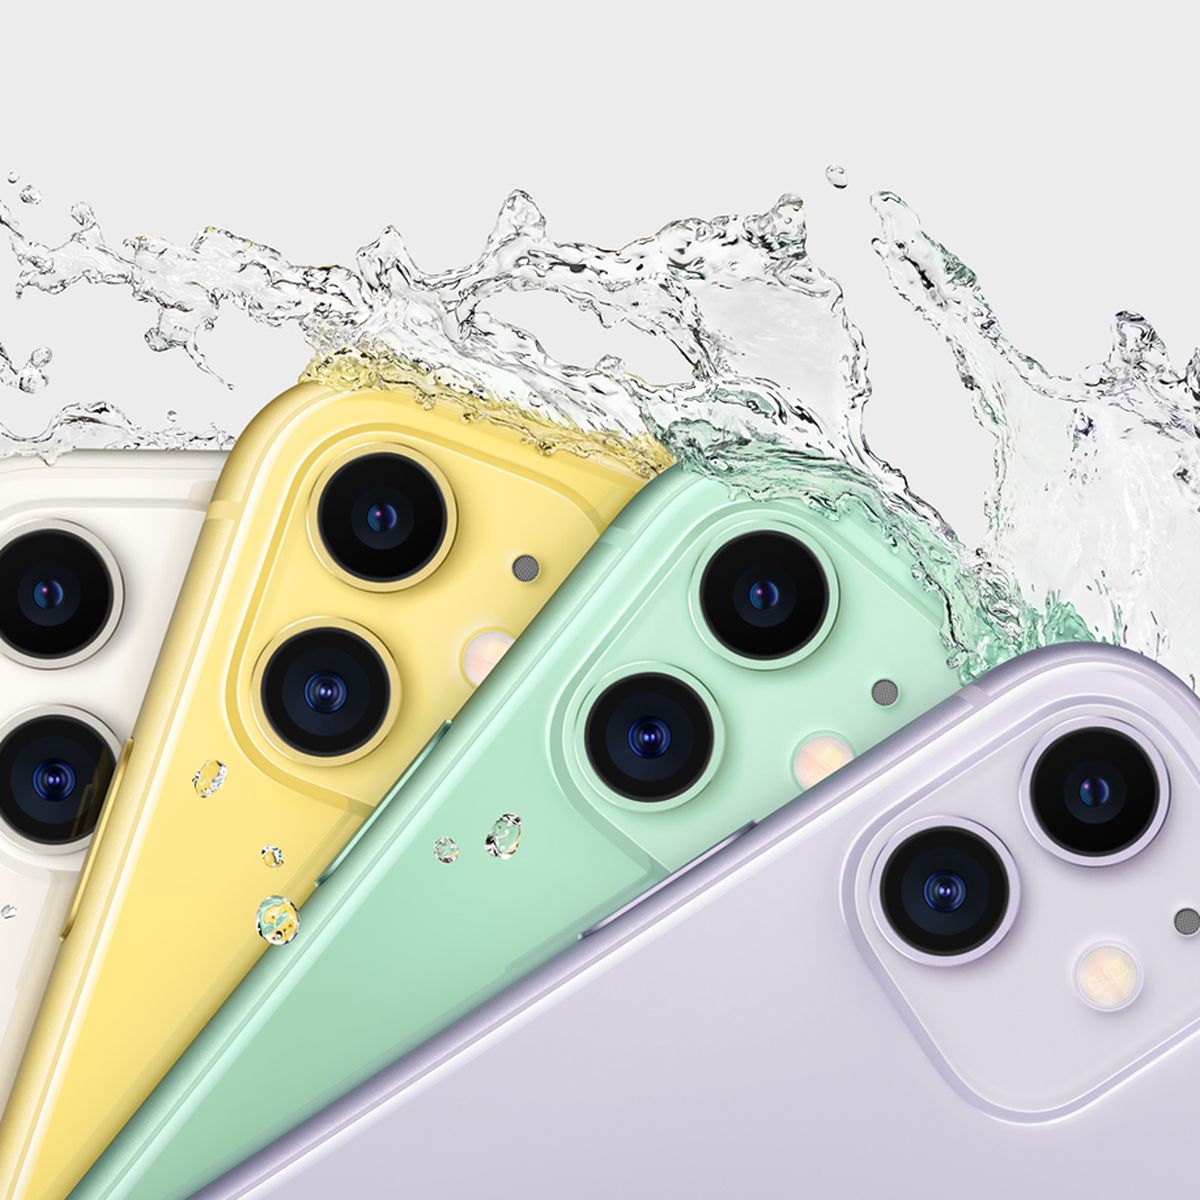 iphone-11-water-resistance-understanding-its-resistance-to-water